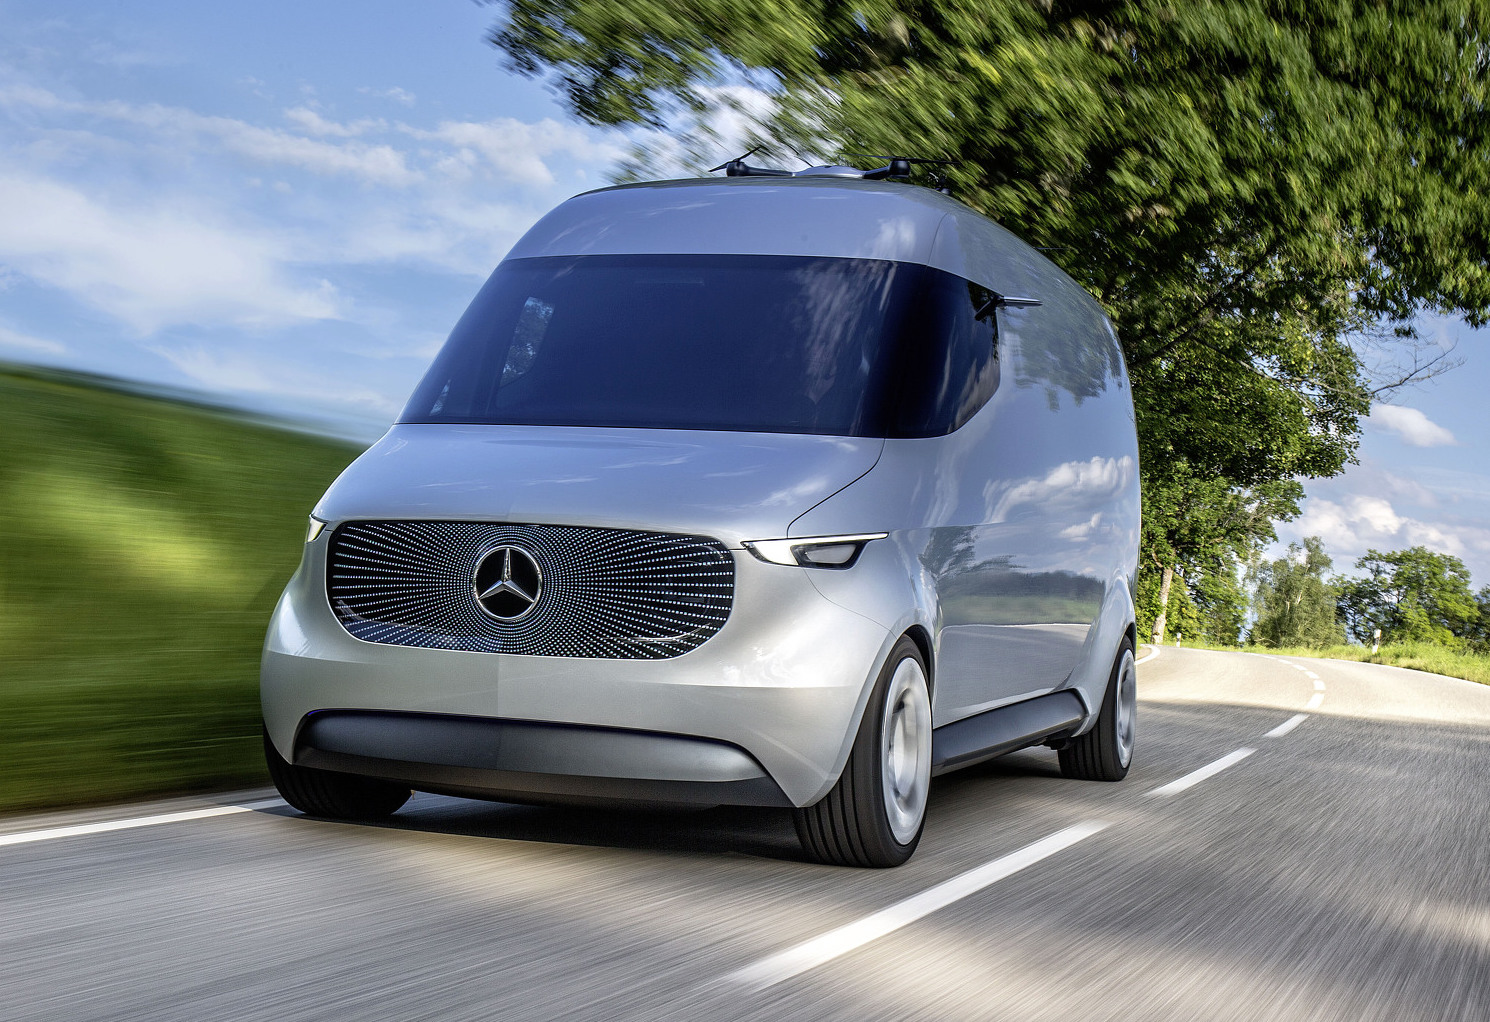 Mercedes reveals futuristic, drone-studded Vision Van concept